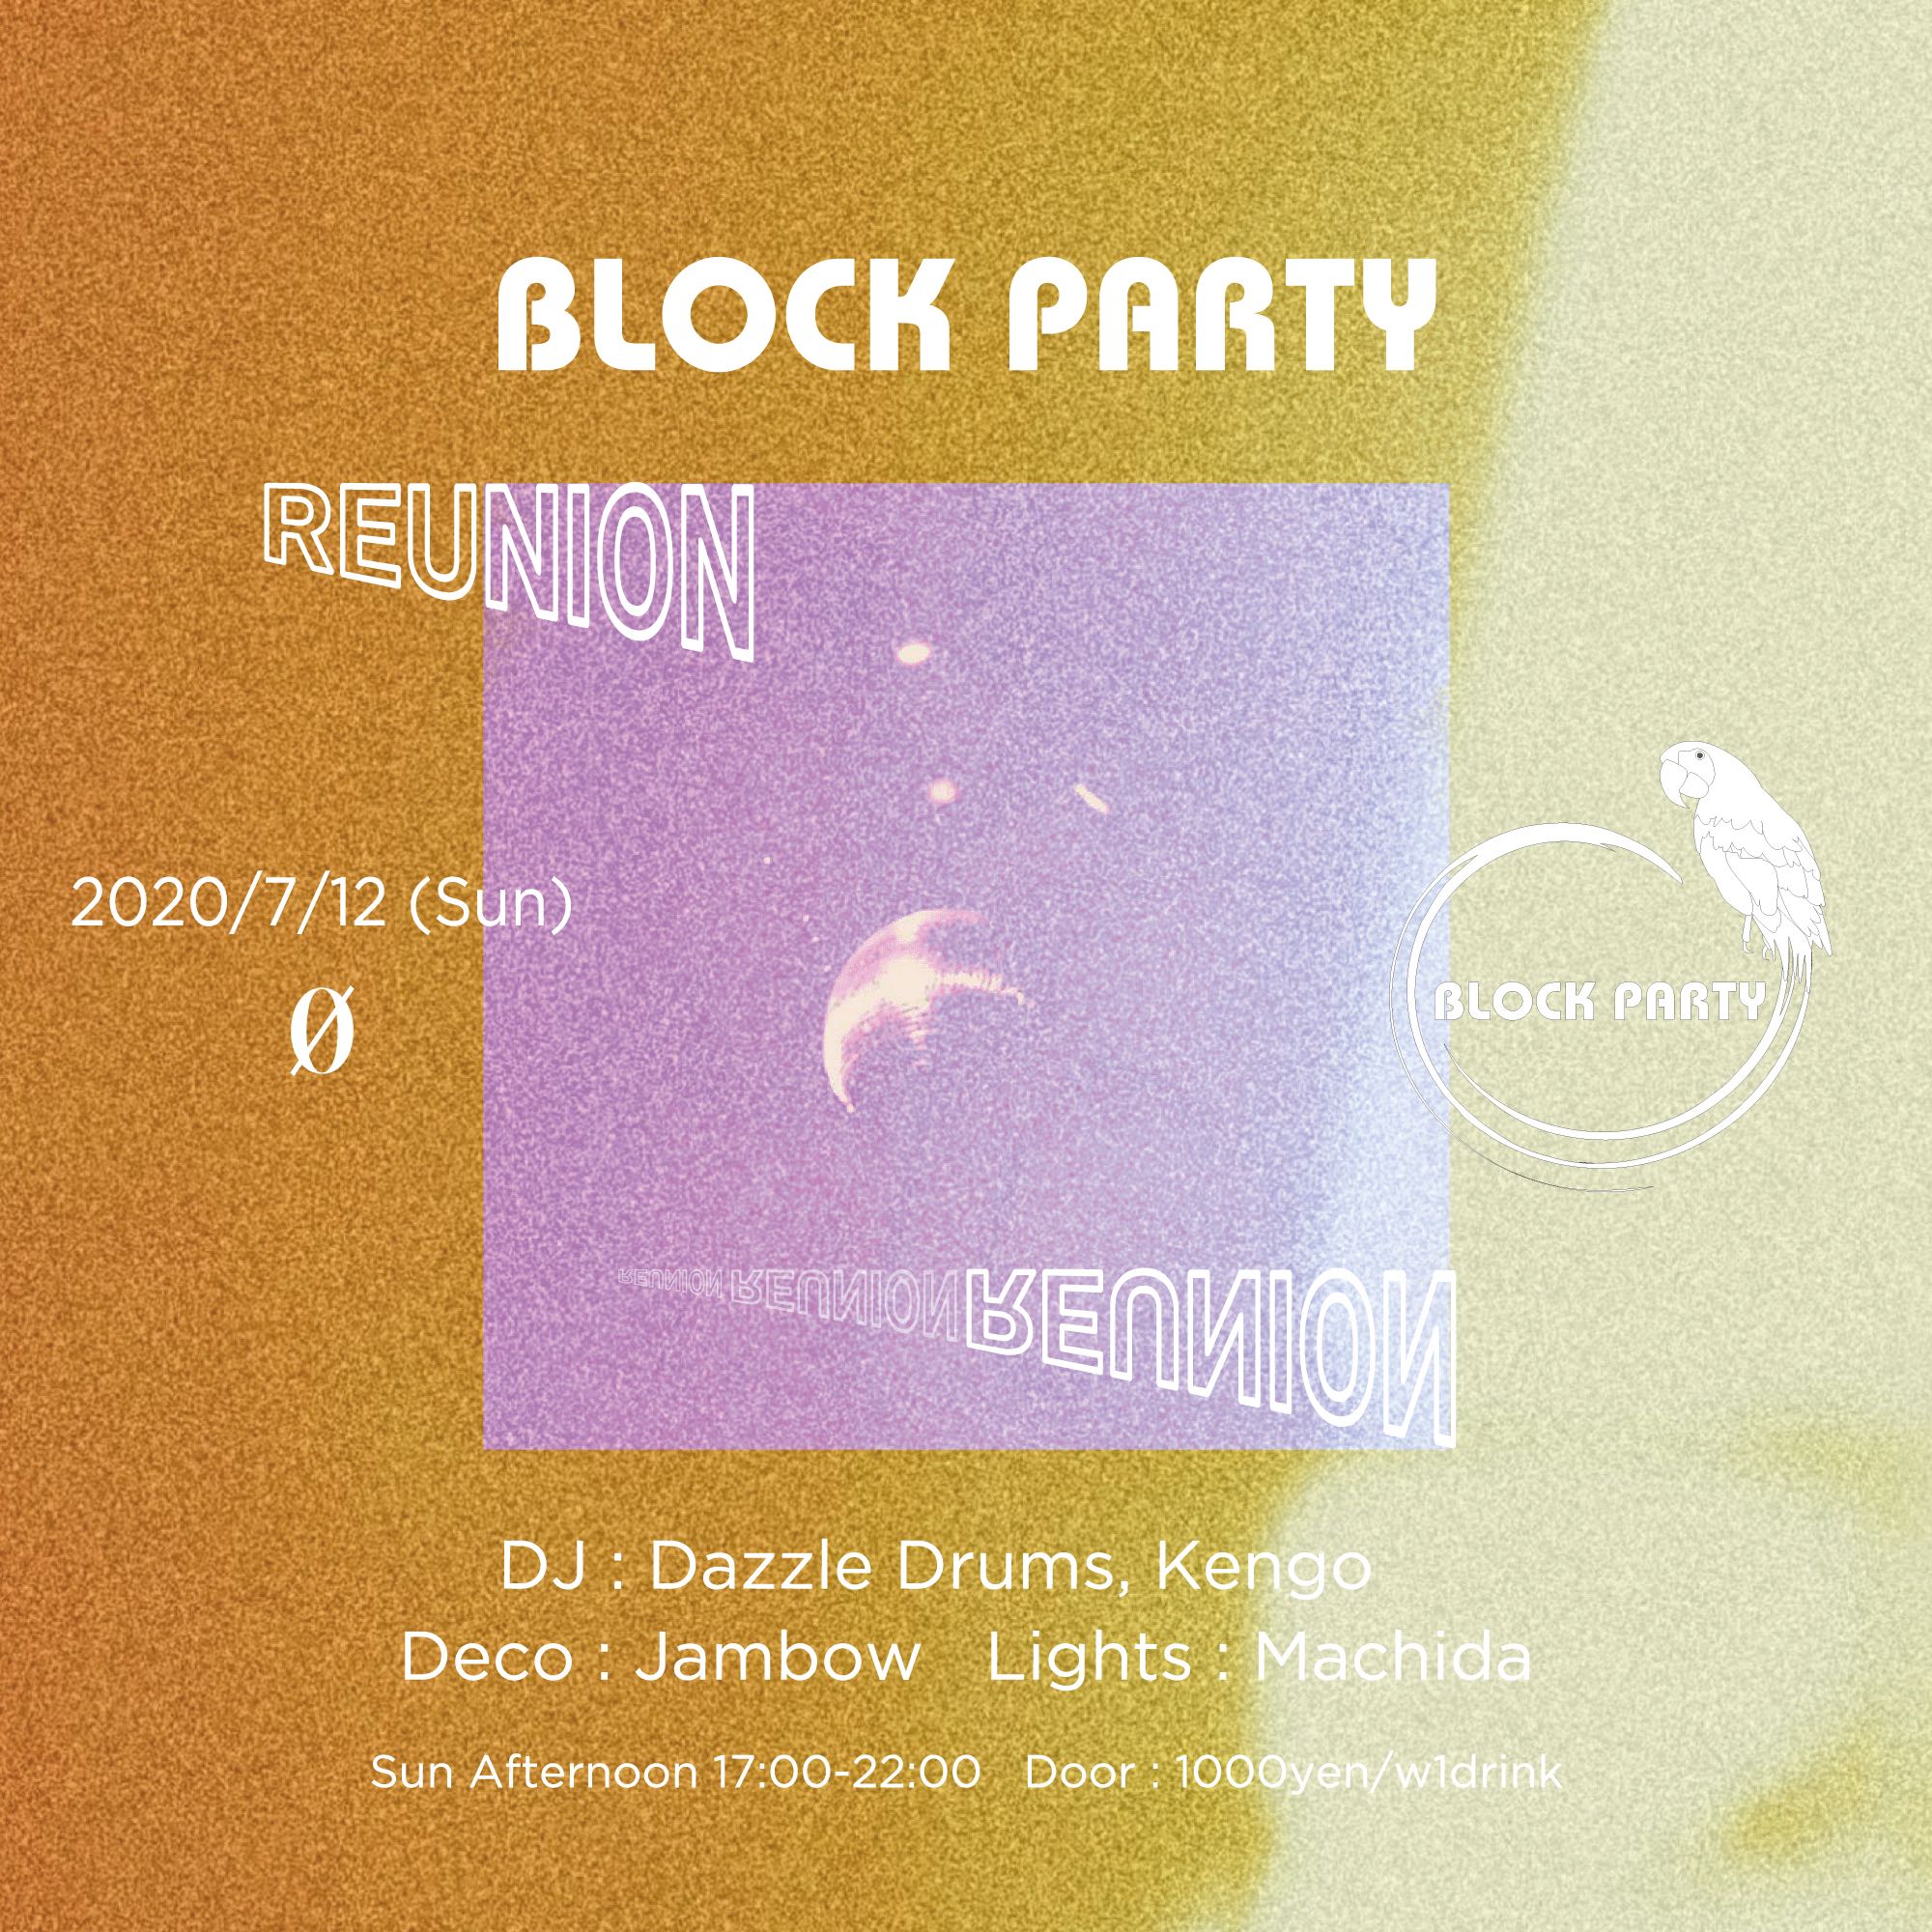 Block Party “Reunion”